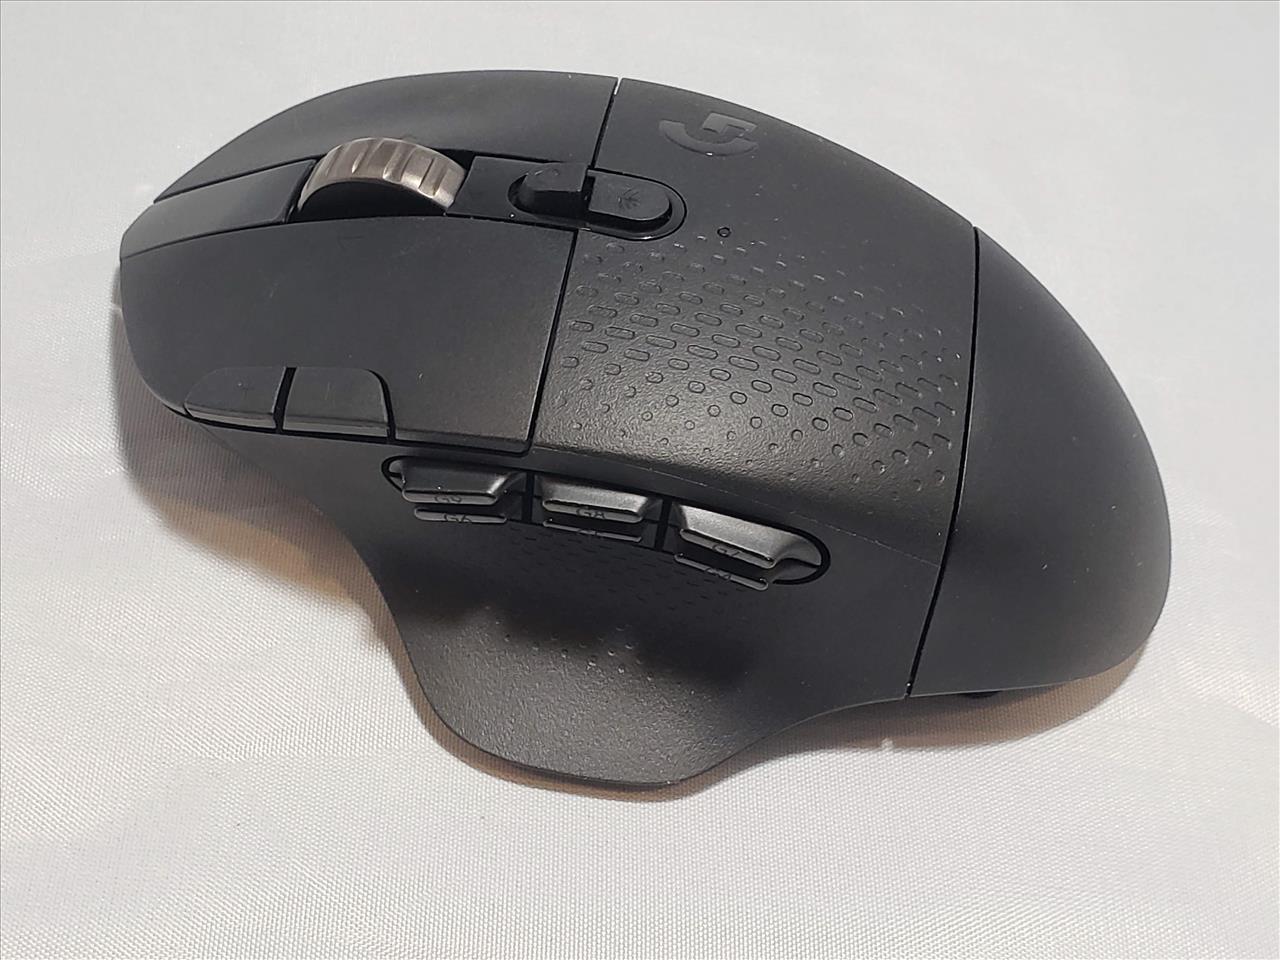 G604 Lightspeed Gaming Mouse